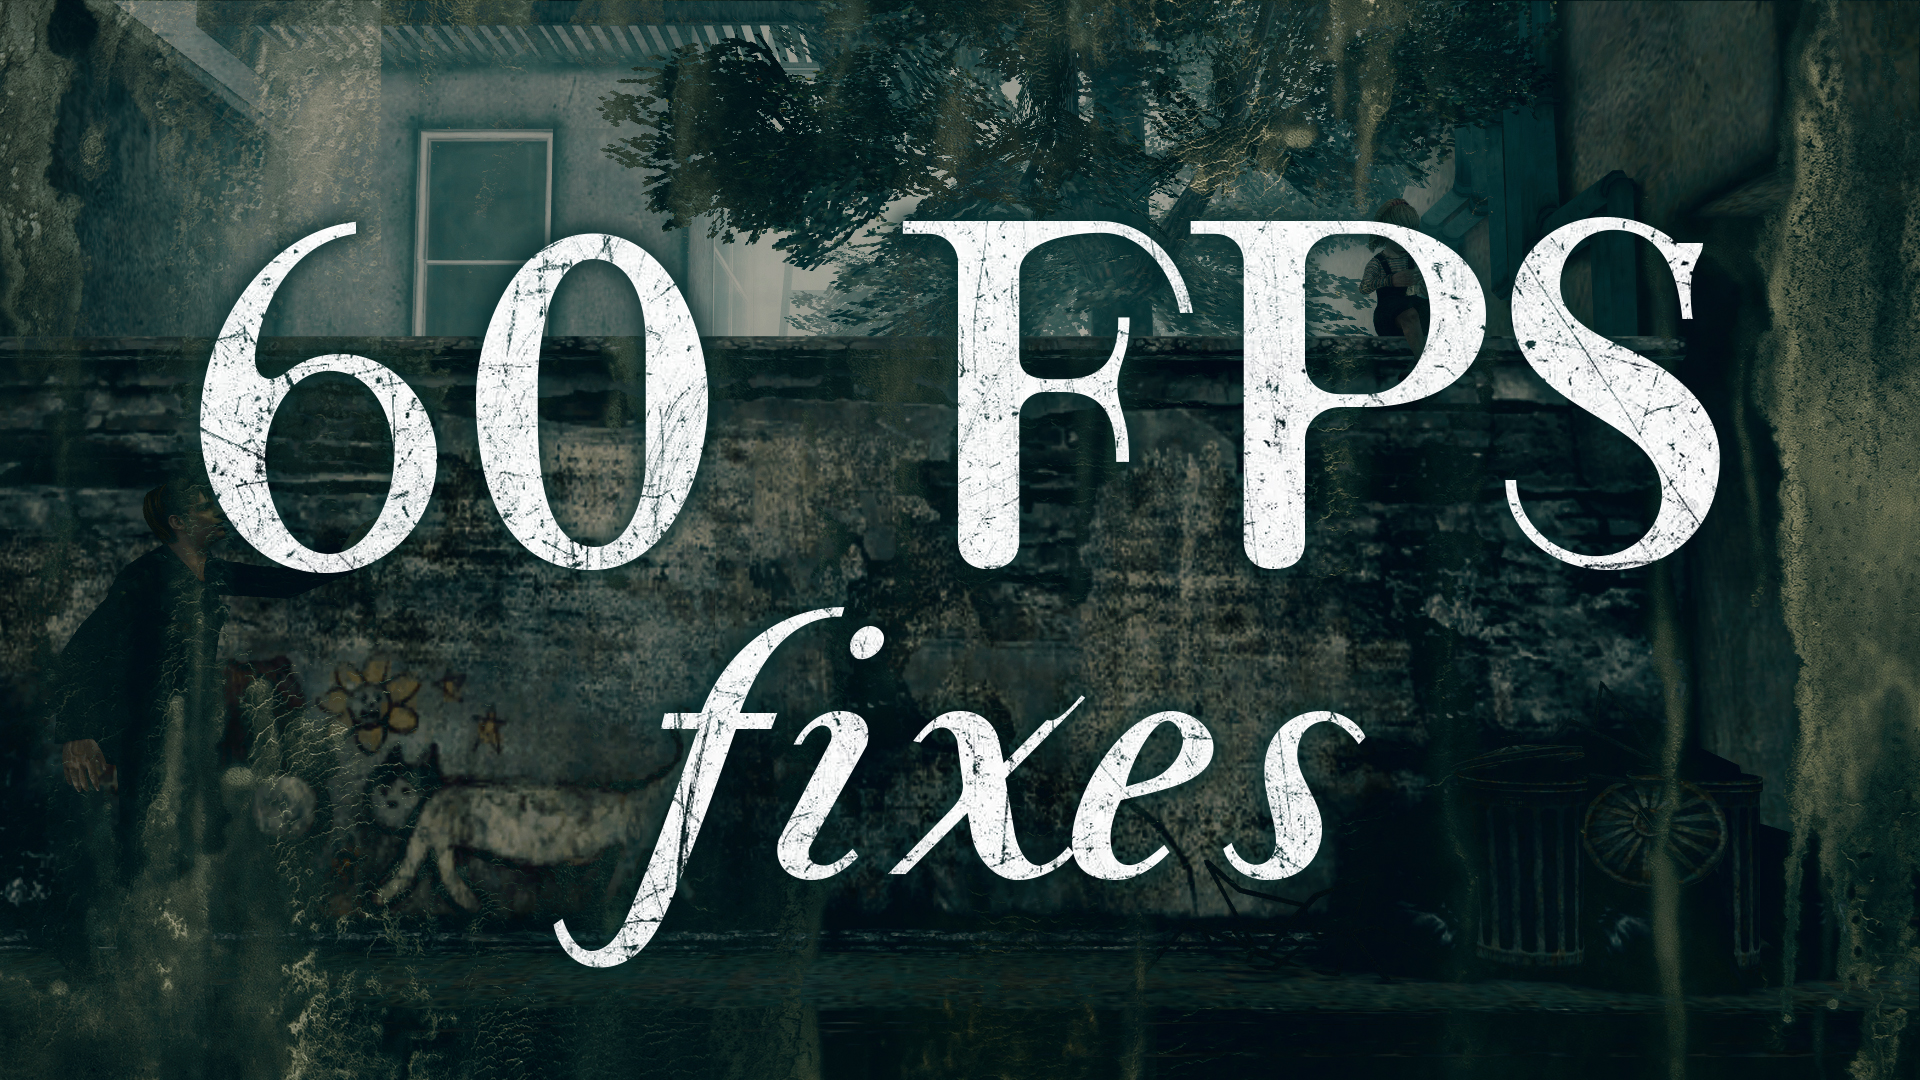 Silent Hill 2: EE Team Seeks Help With 60FPS Bugs